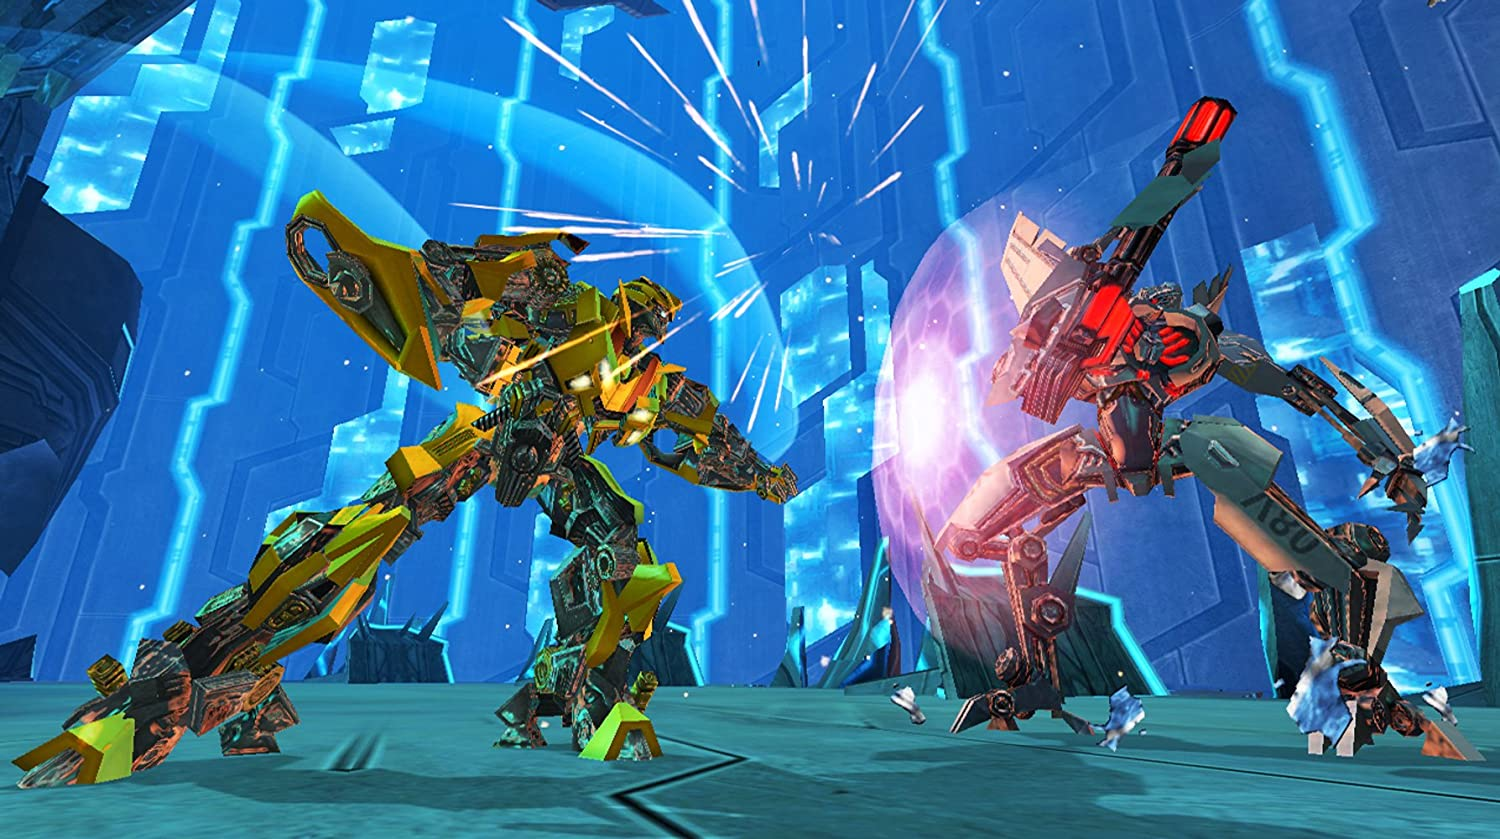 Transformers 2 - - [Nintendo Rache Wii] Die